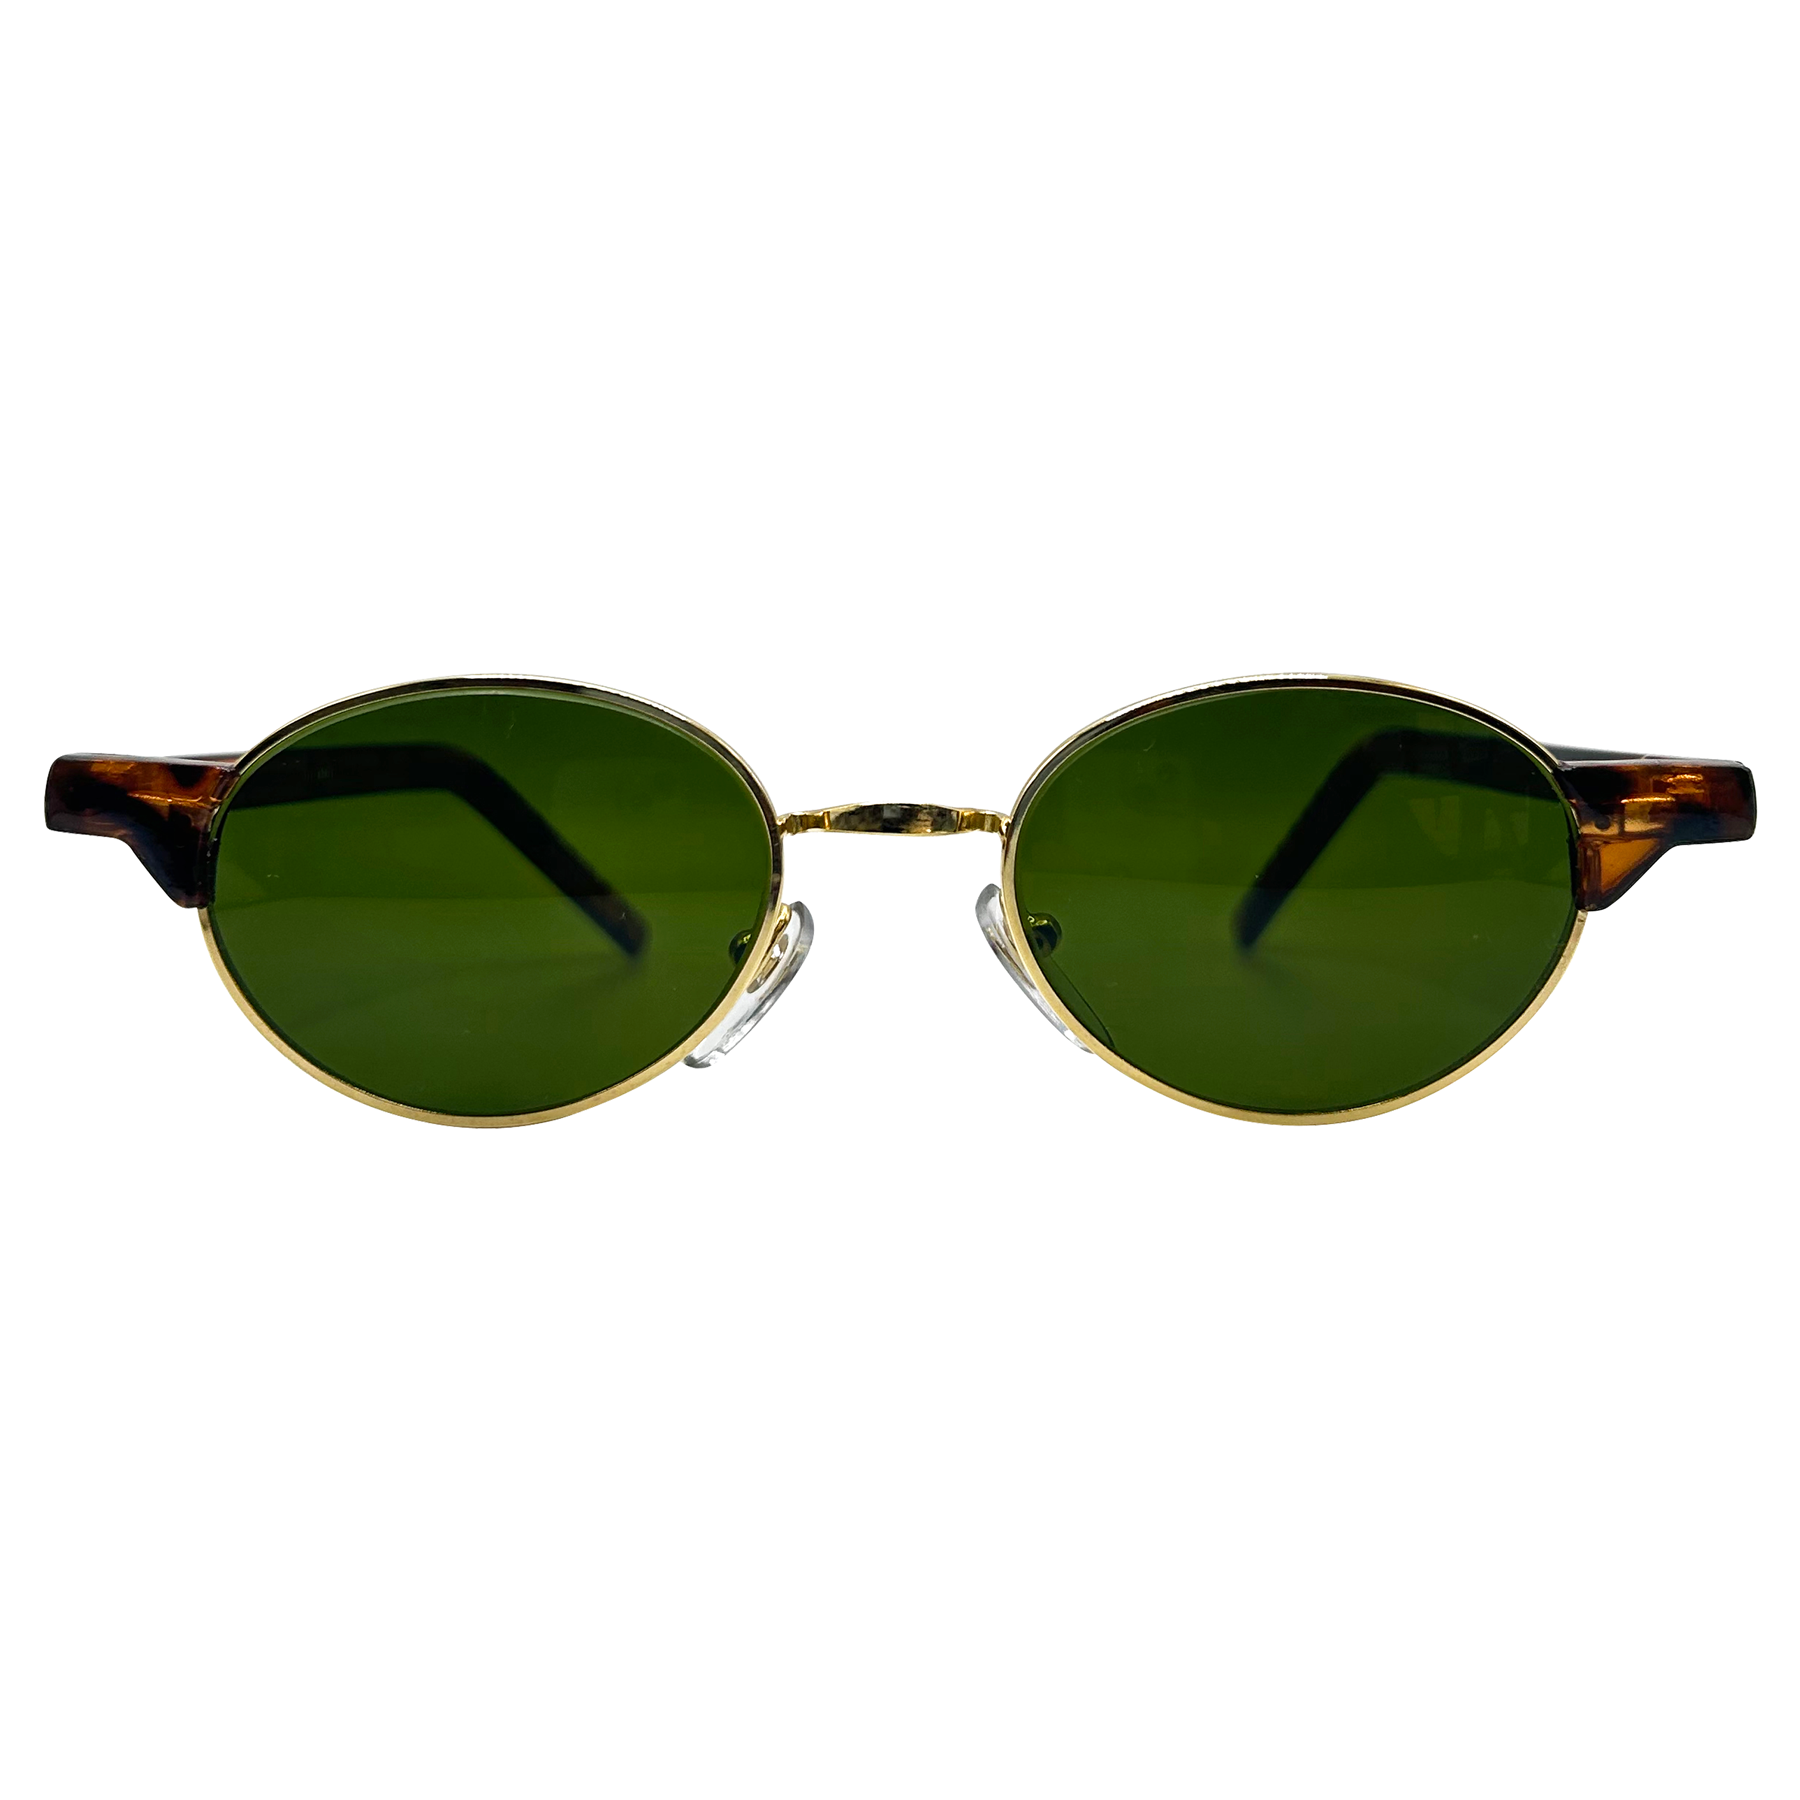 Sunglasses Ray Ban Wayfarer I Old 80's USA Sunglasses B&L